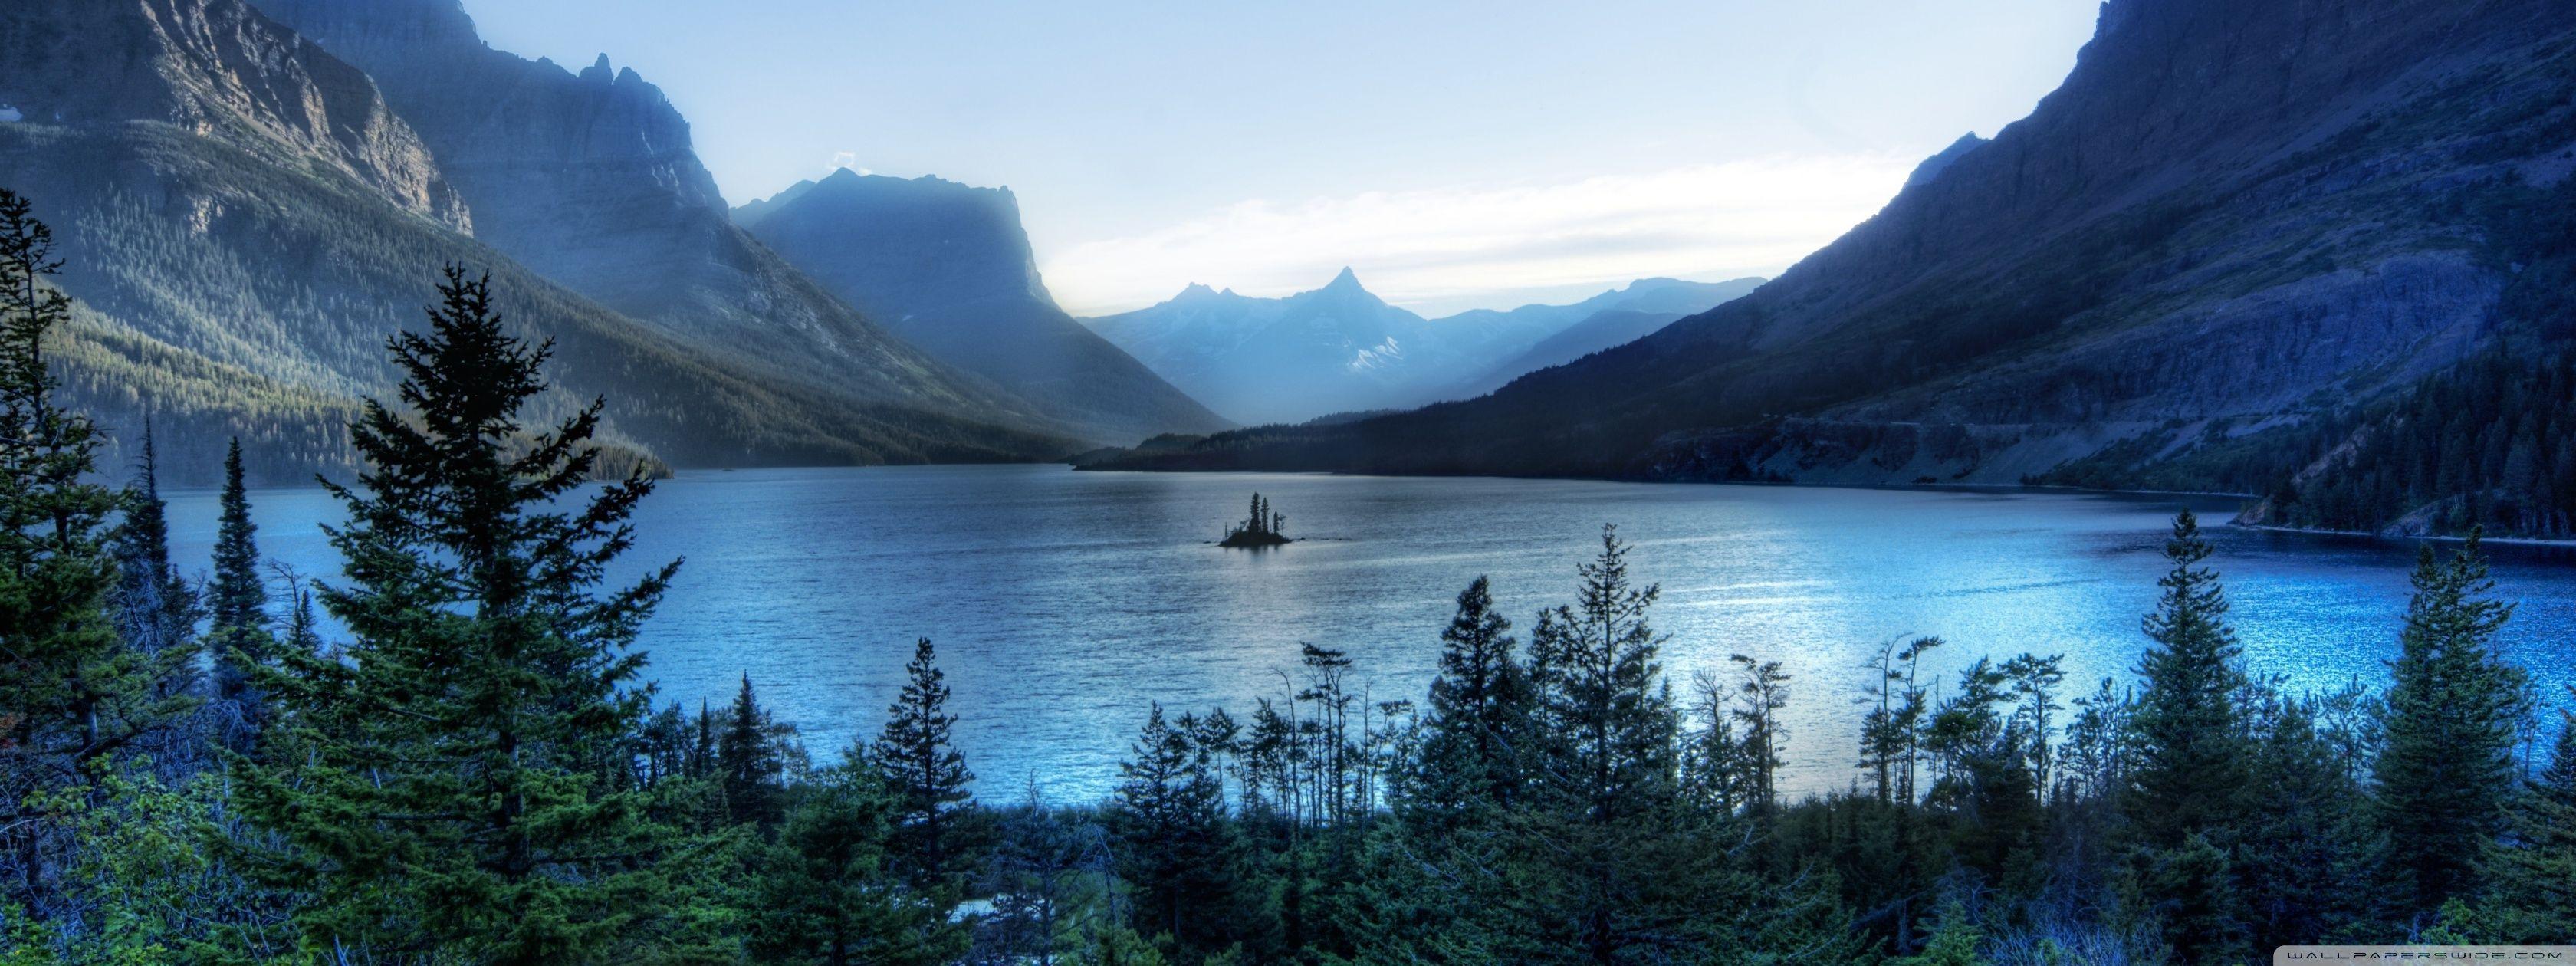 Morning At Glacier National Park HD desktop wallpaper, High